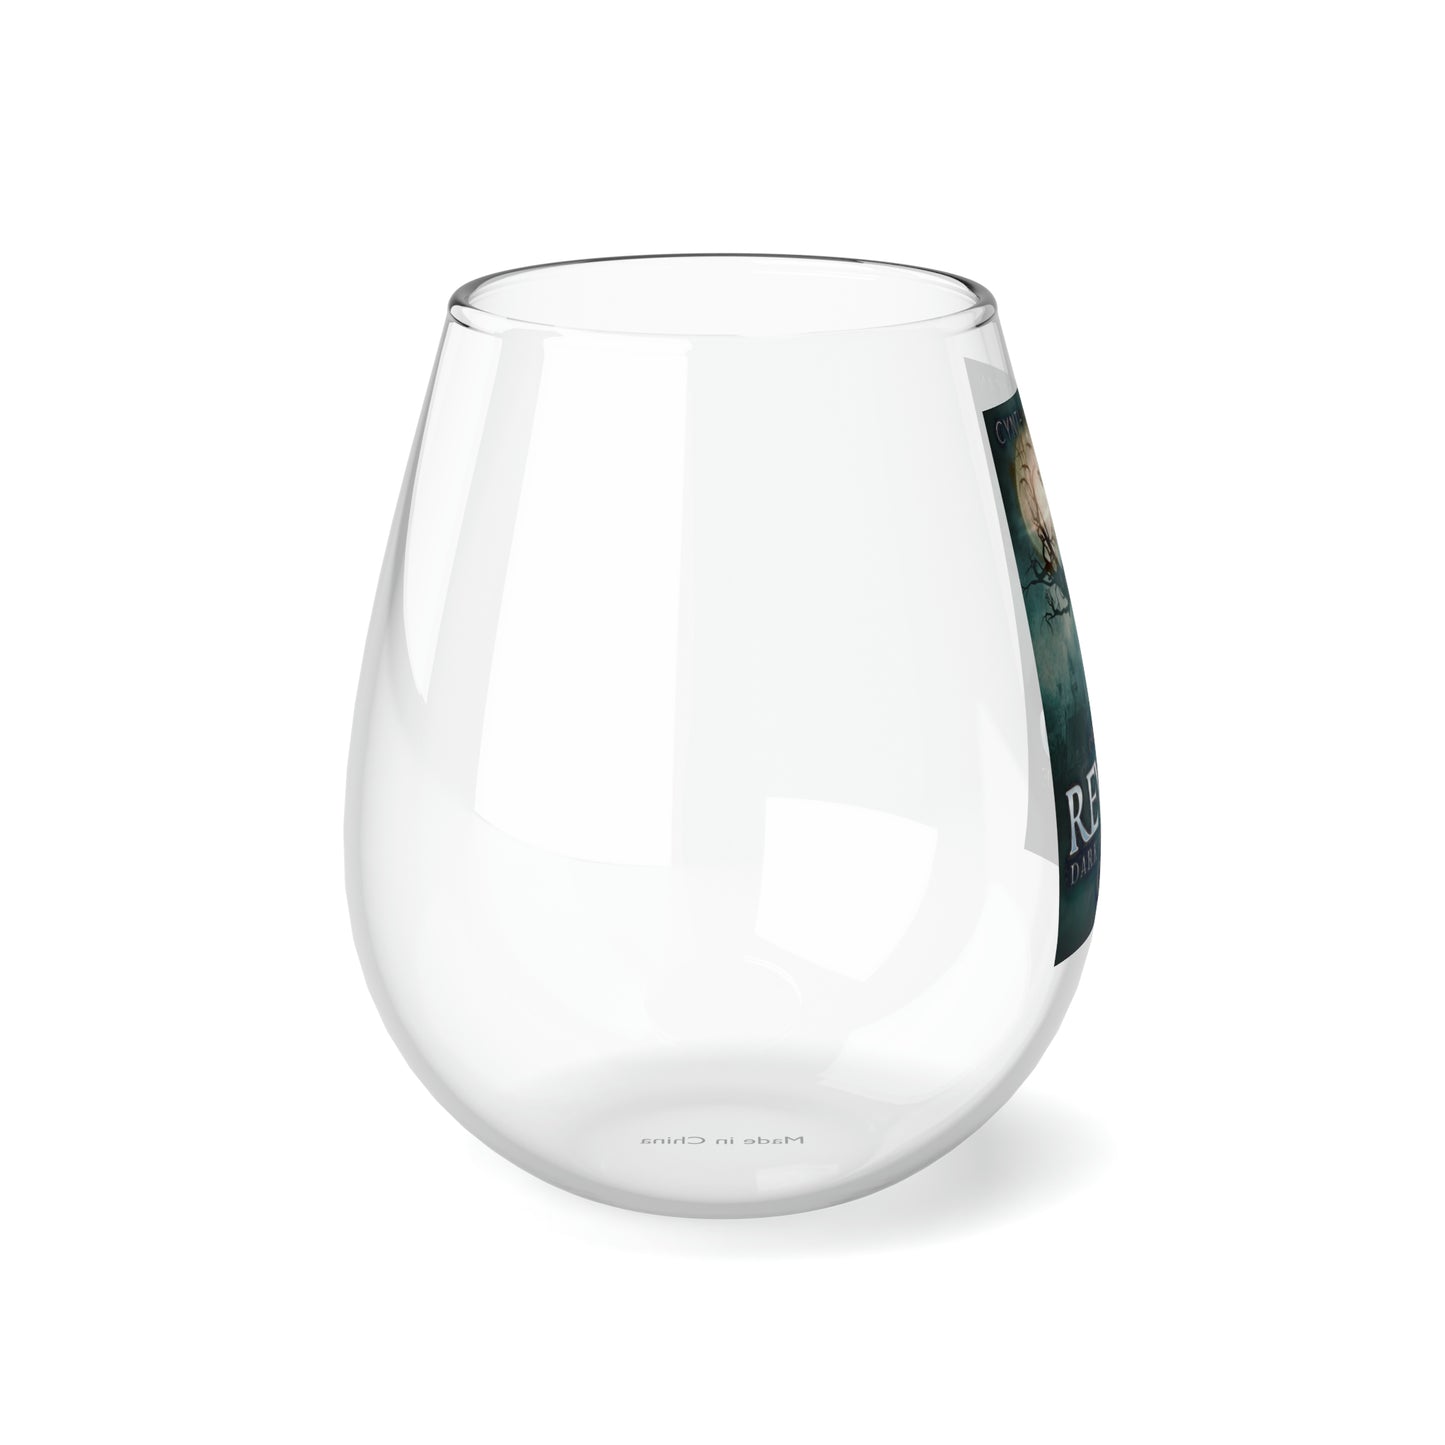 The Reviled - Stemless Wine Glass, 11.75oz